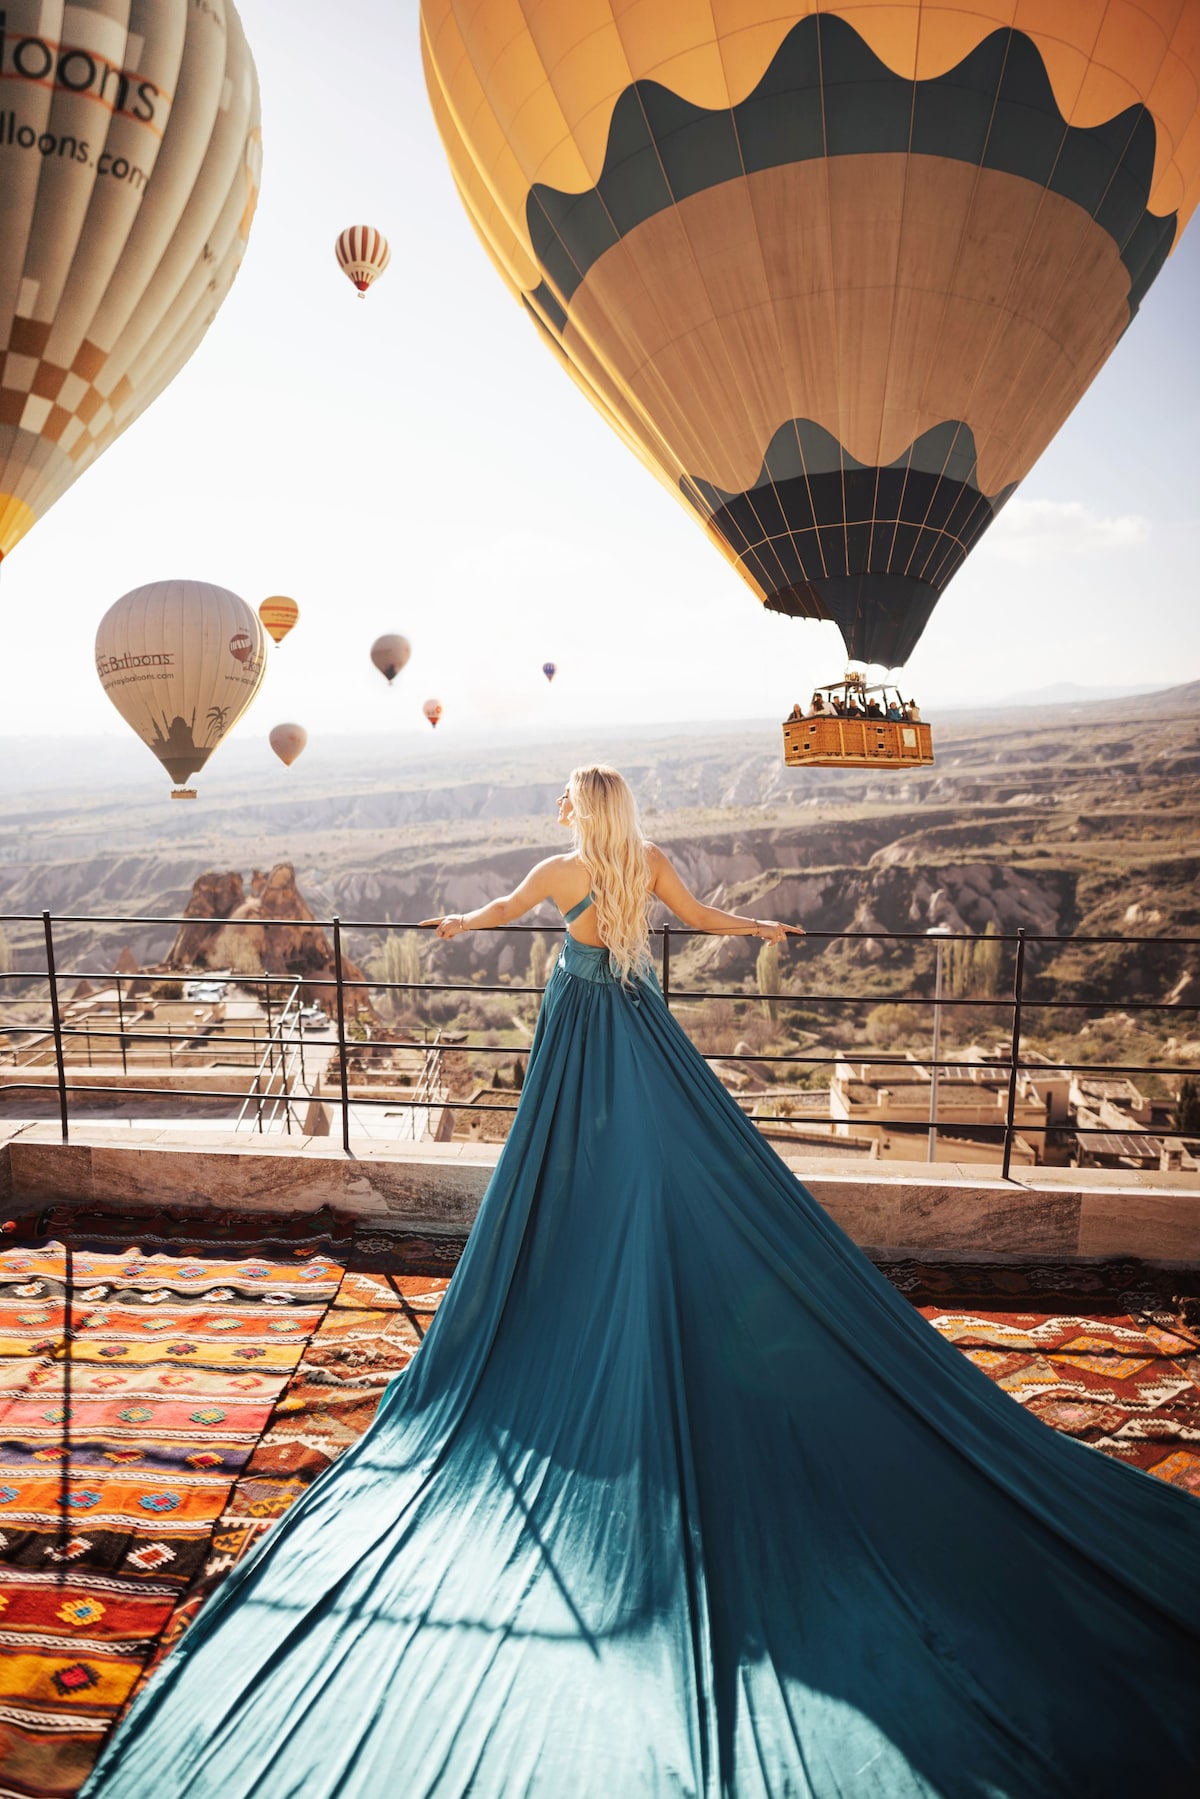 Olenda Cappadocia/Carpet Terrace/Balloon Watching2